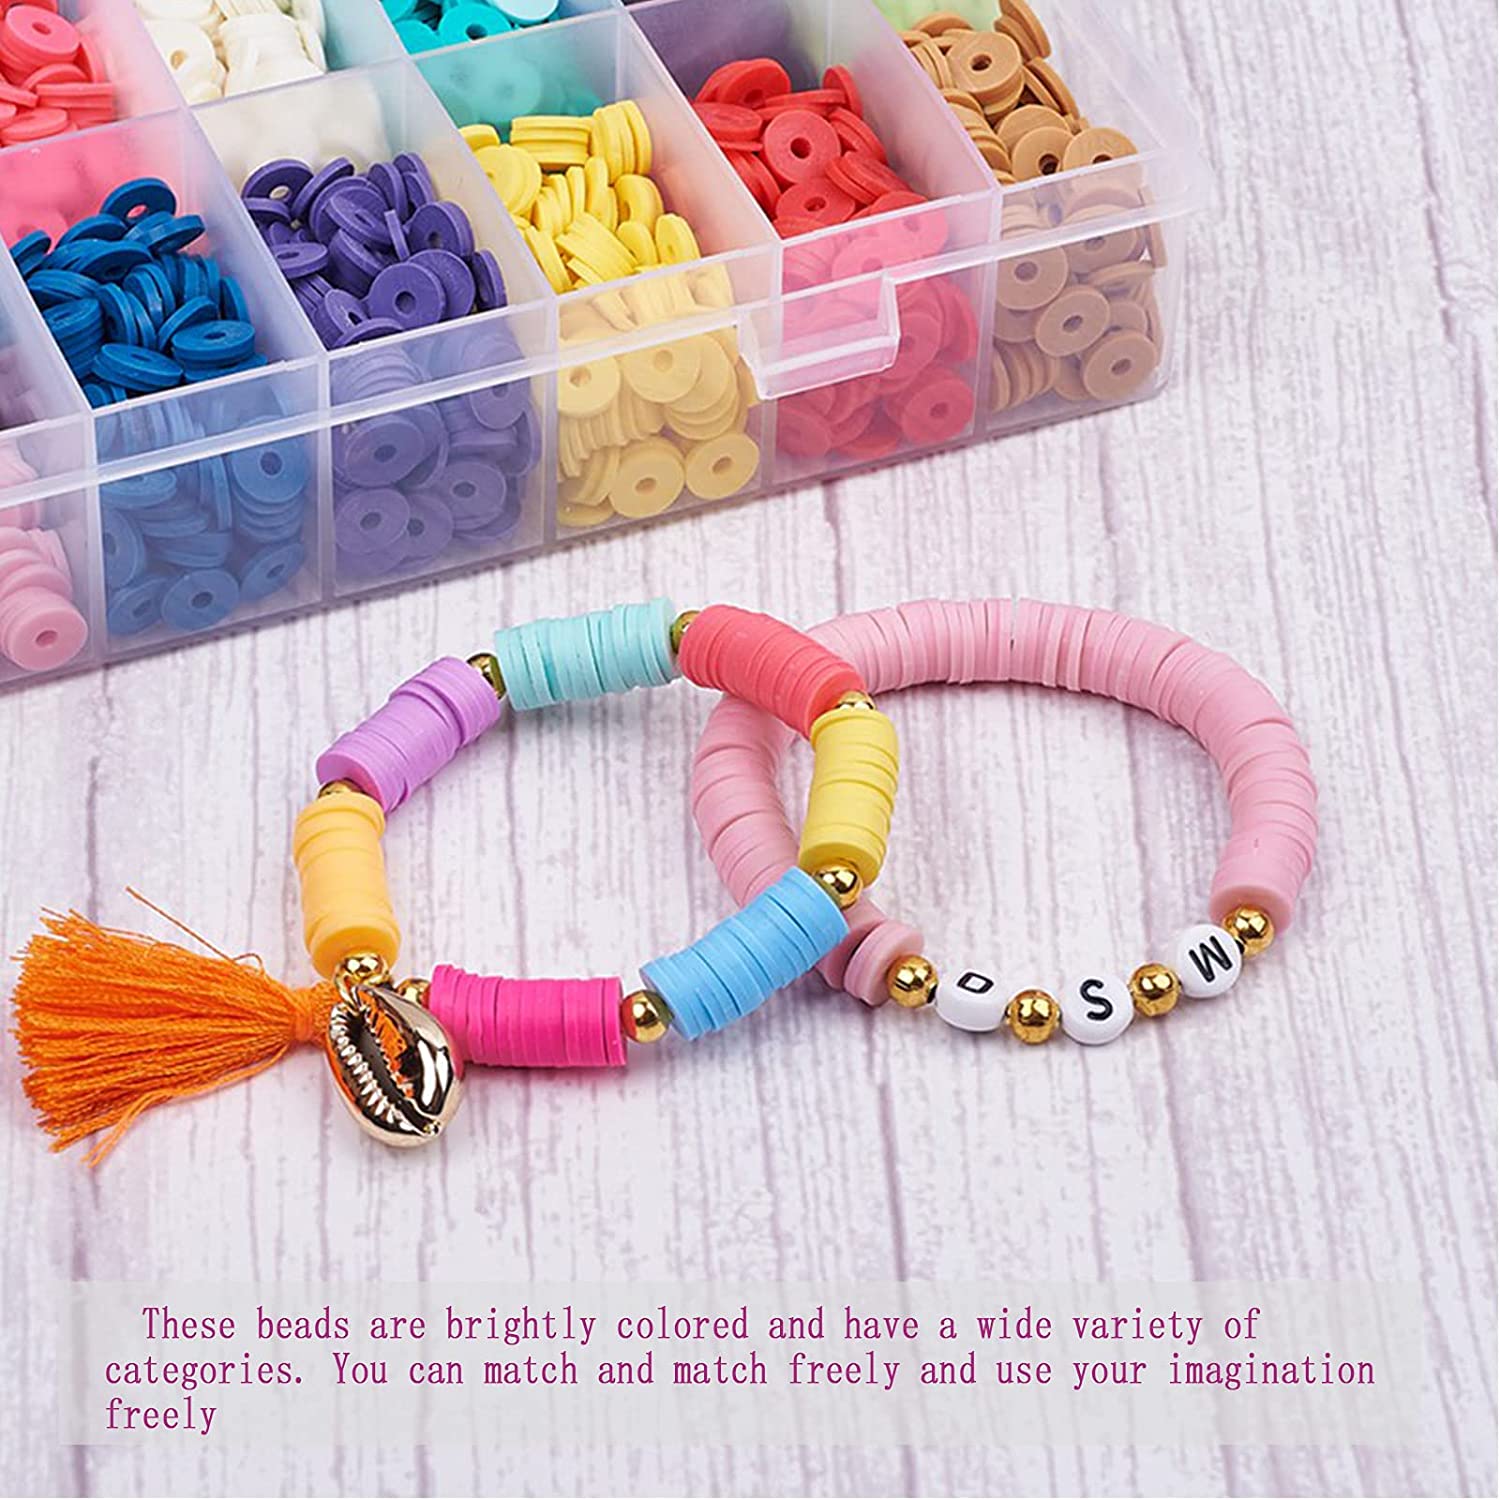 Koralakiri 24 Colors Clay Beads for Bracelet Making Kit for Girls 8-12 Gifts, Polymer Heishi Beads, Letter Beads for Girls Jewelry Making Crafts - image 4 of 6